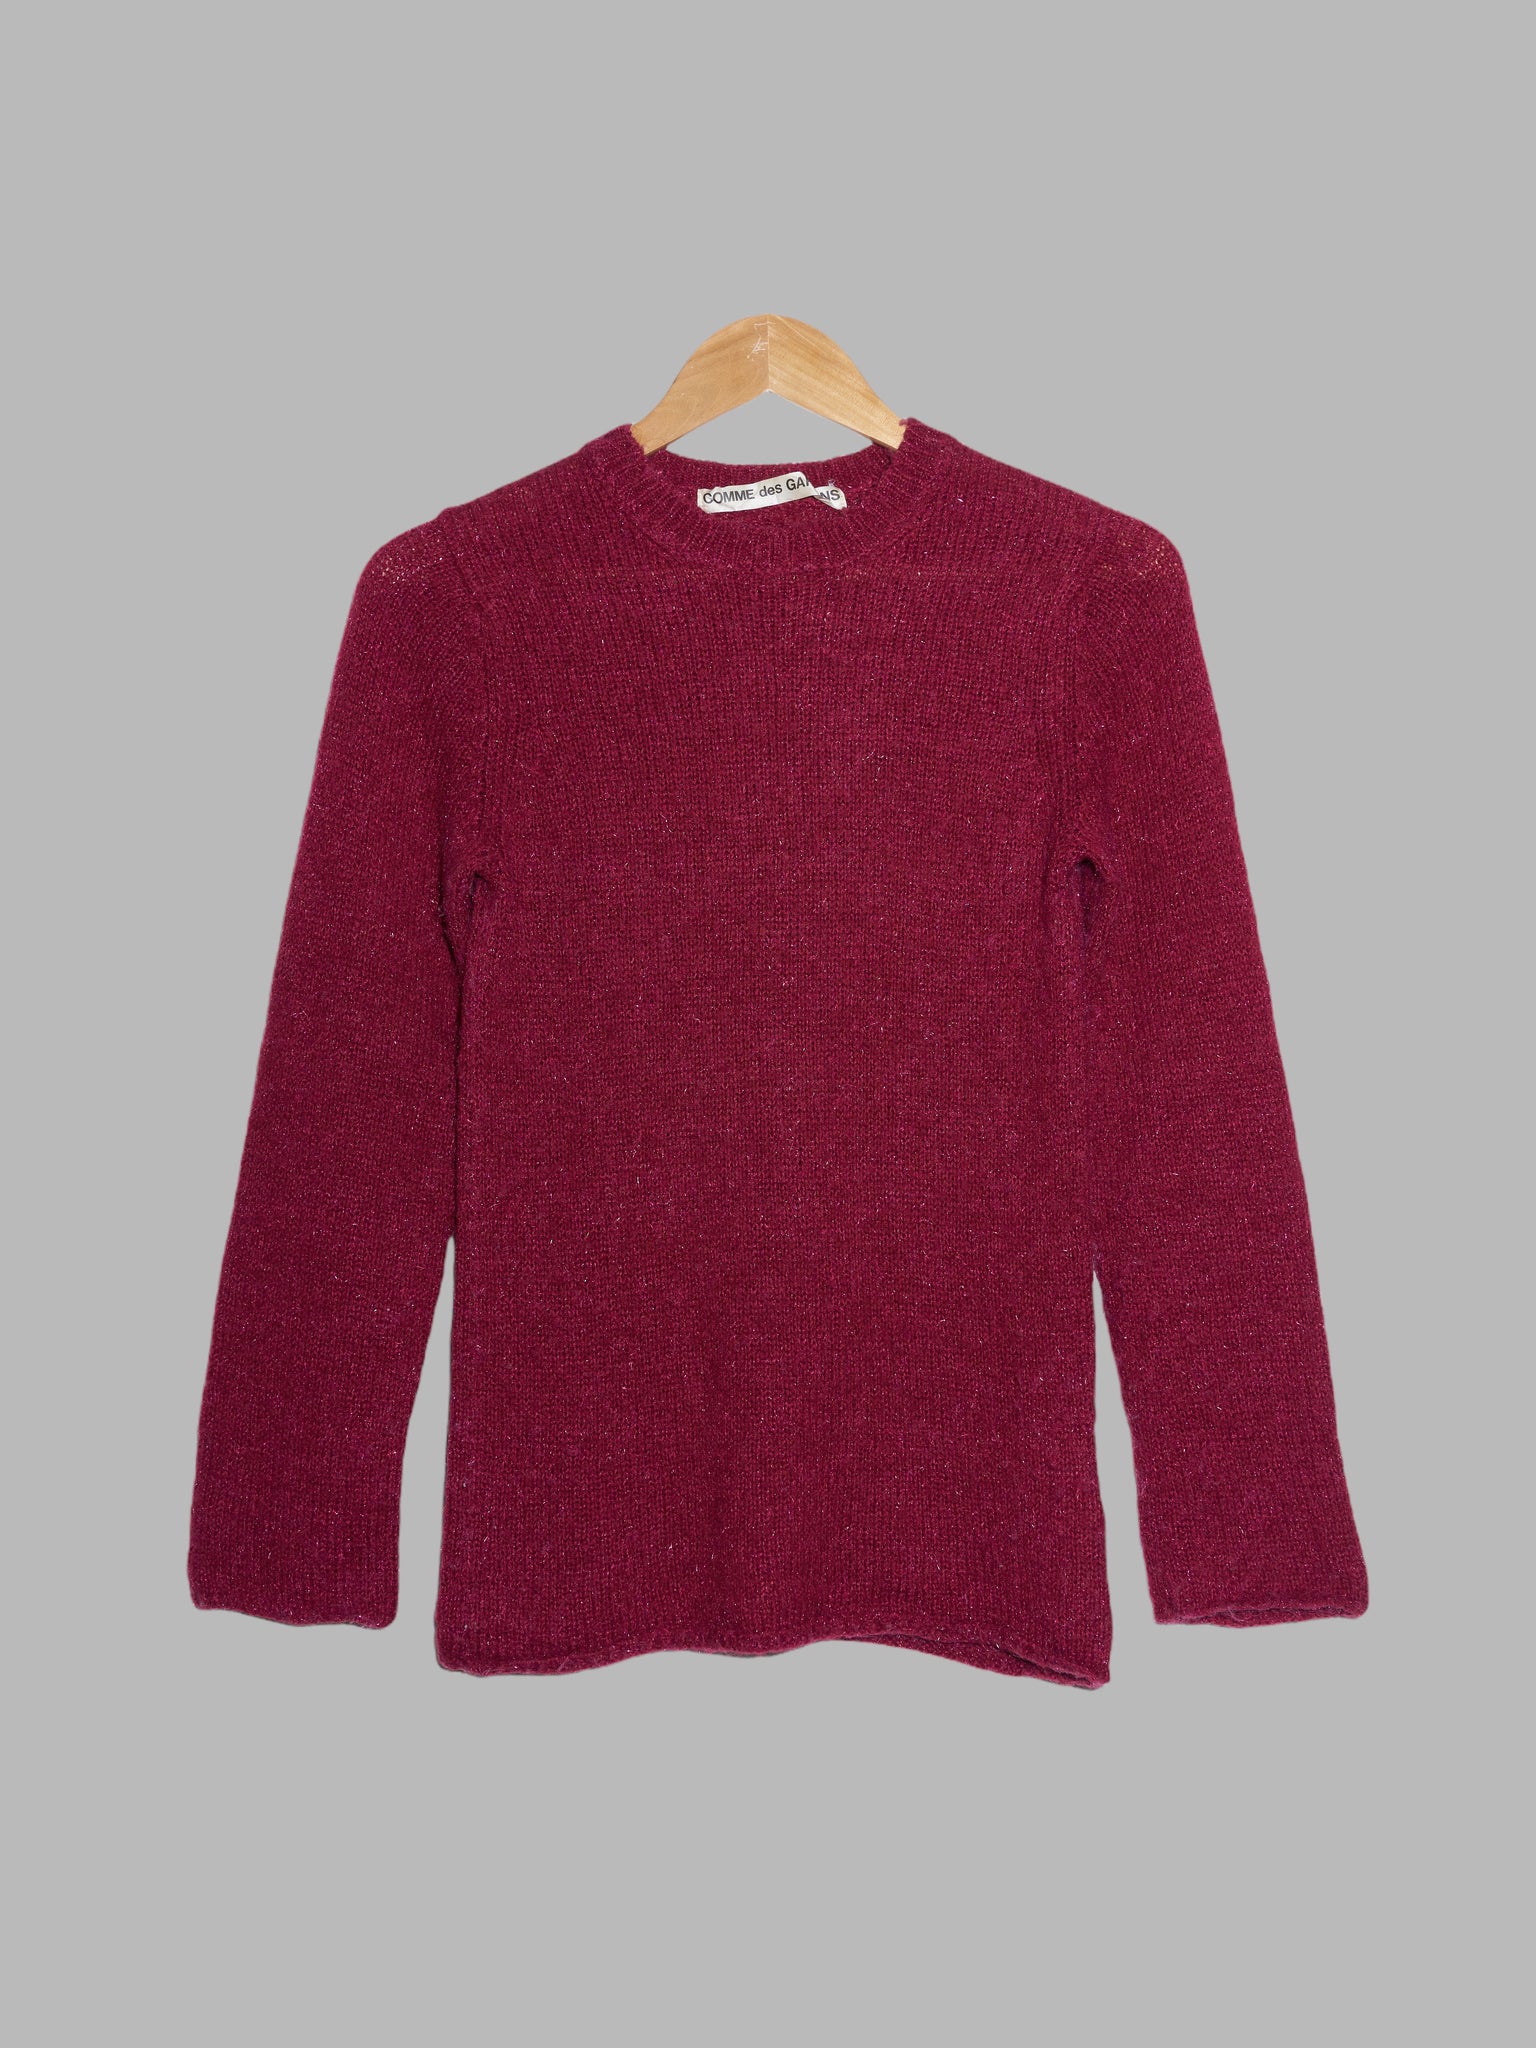 Comme des Garcons 1999 burgundy or mauve-ish wool nylon jumper